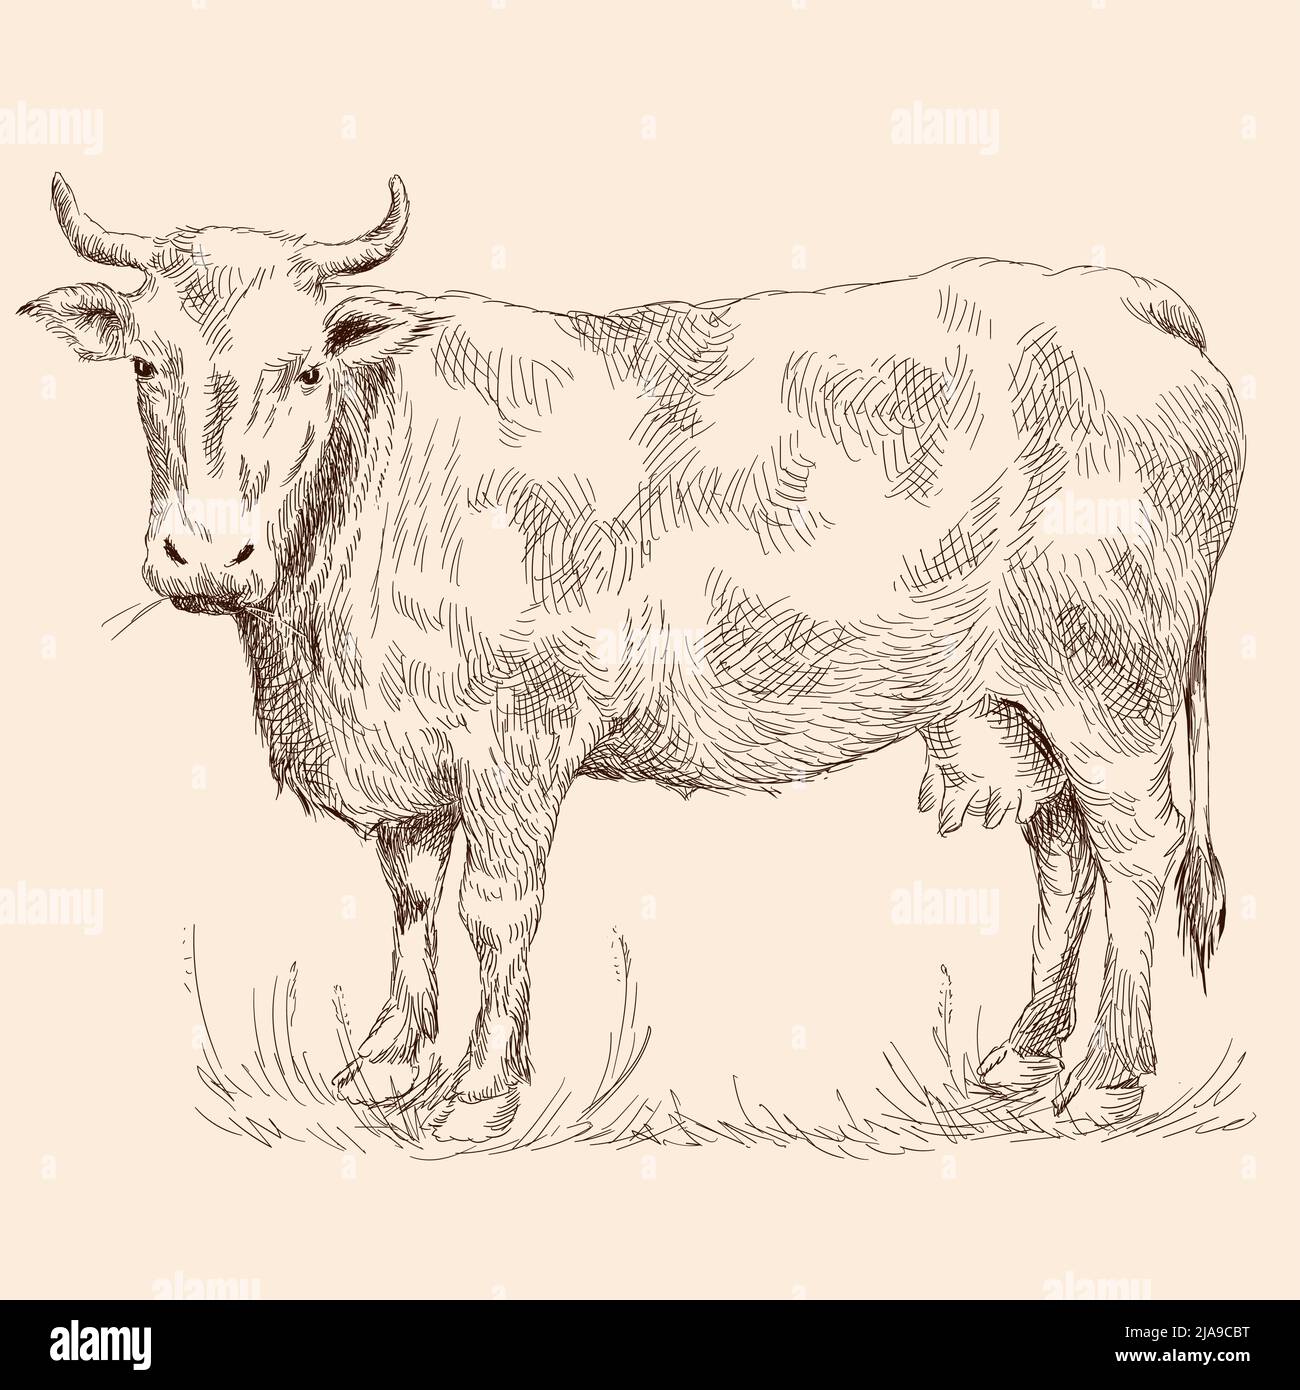 Dairy Cow Pencil Sketch Animal Farm Stock Illustration 390966316   Shutterstock